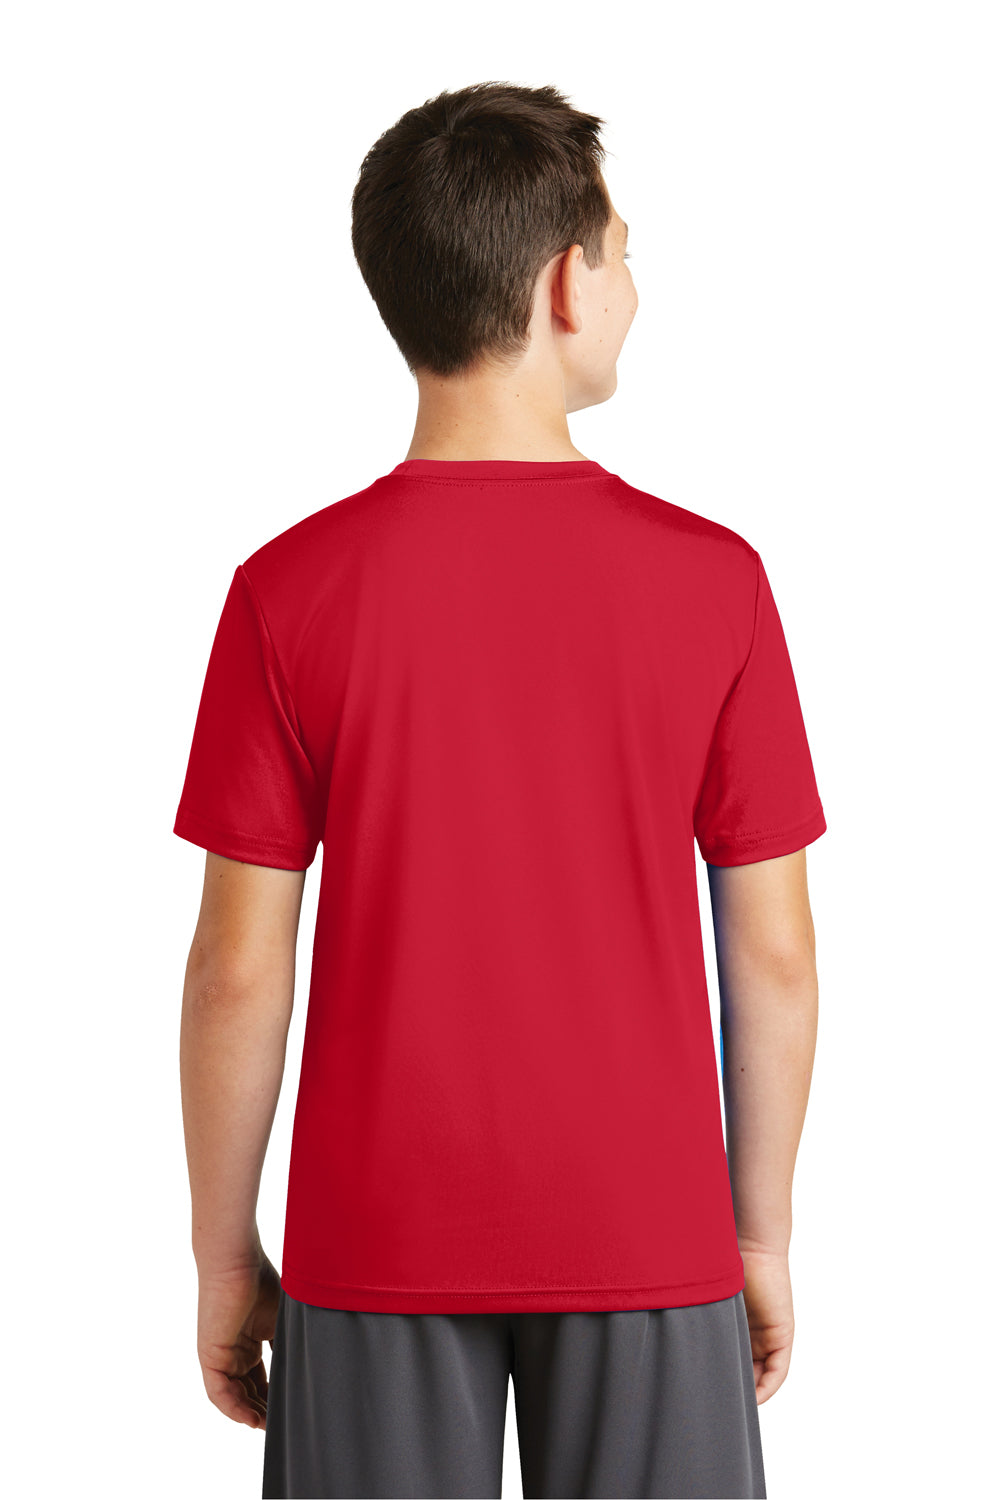 Sport-Tek YST320 Youth Tough Moisture Wicking Short Sleeve Crewneck T-Shirt Red Back